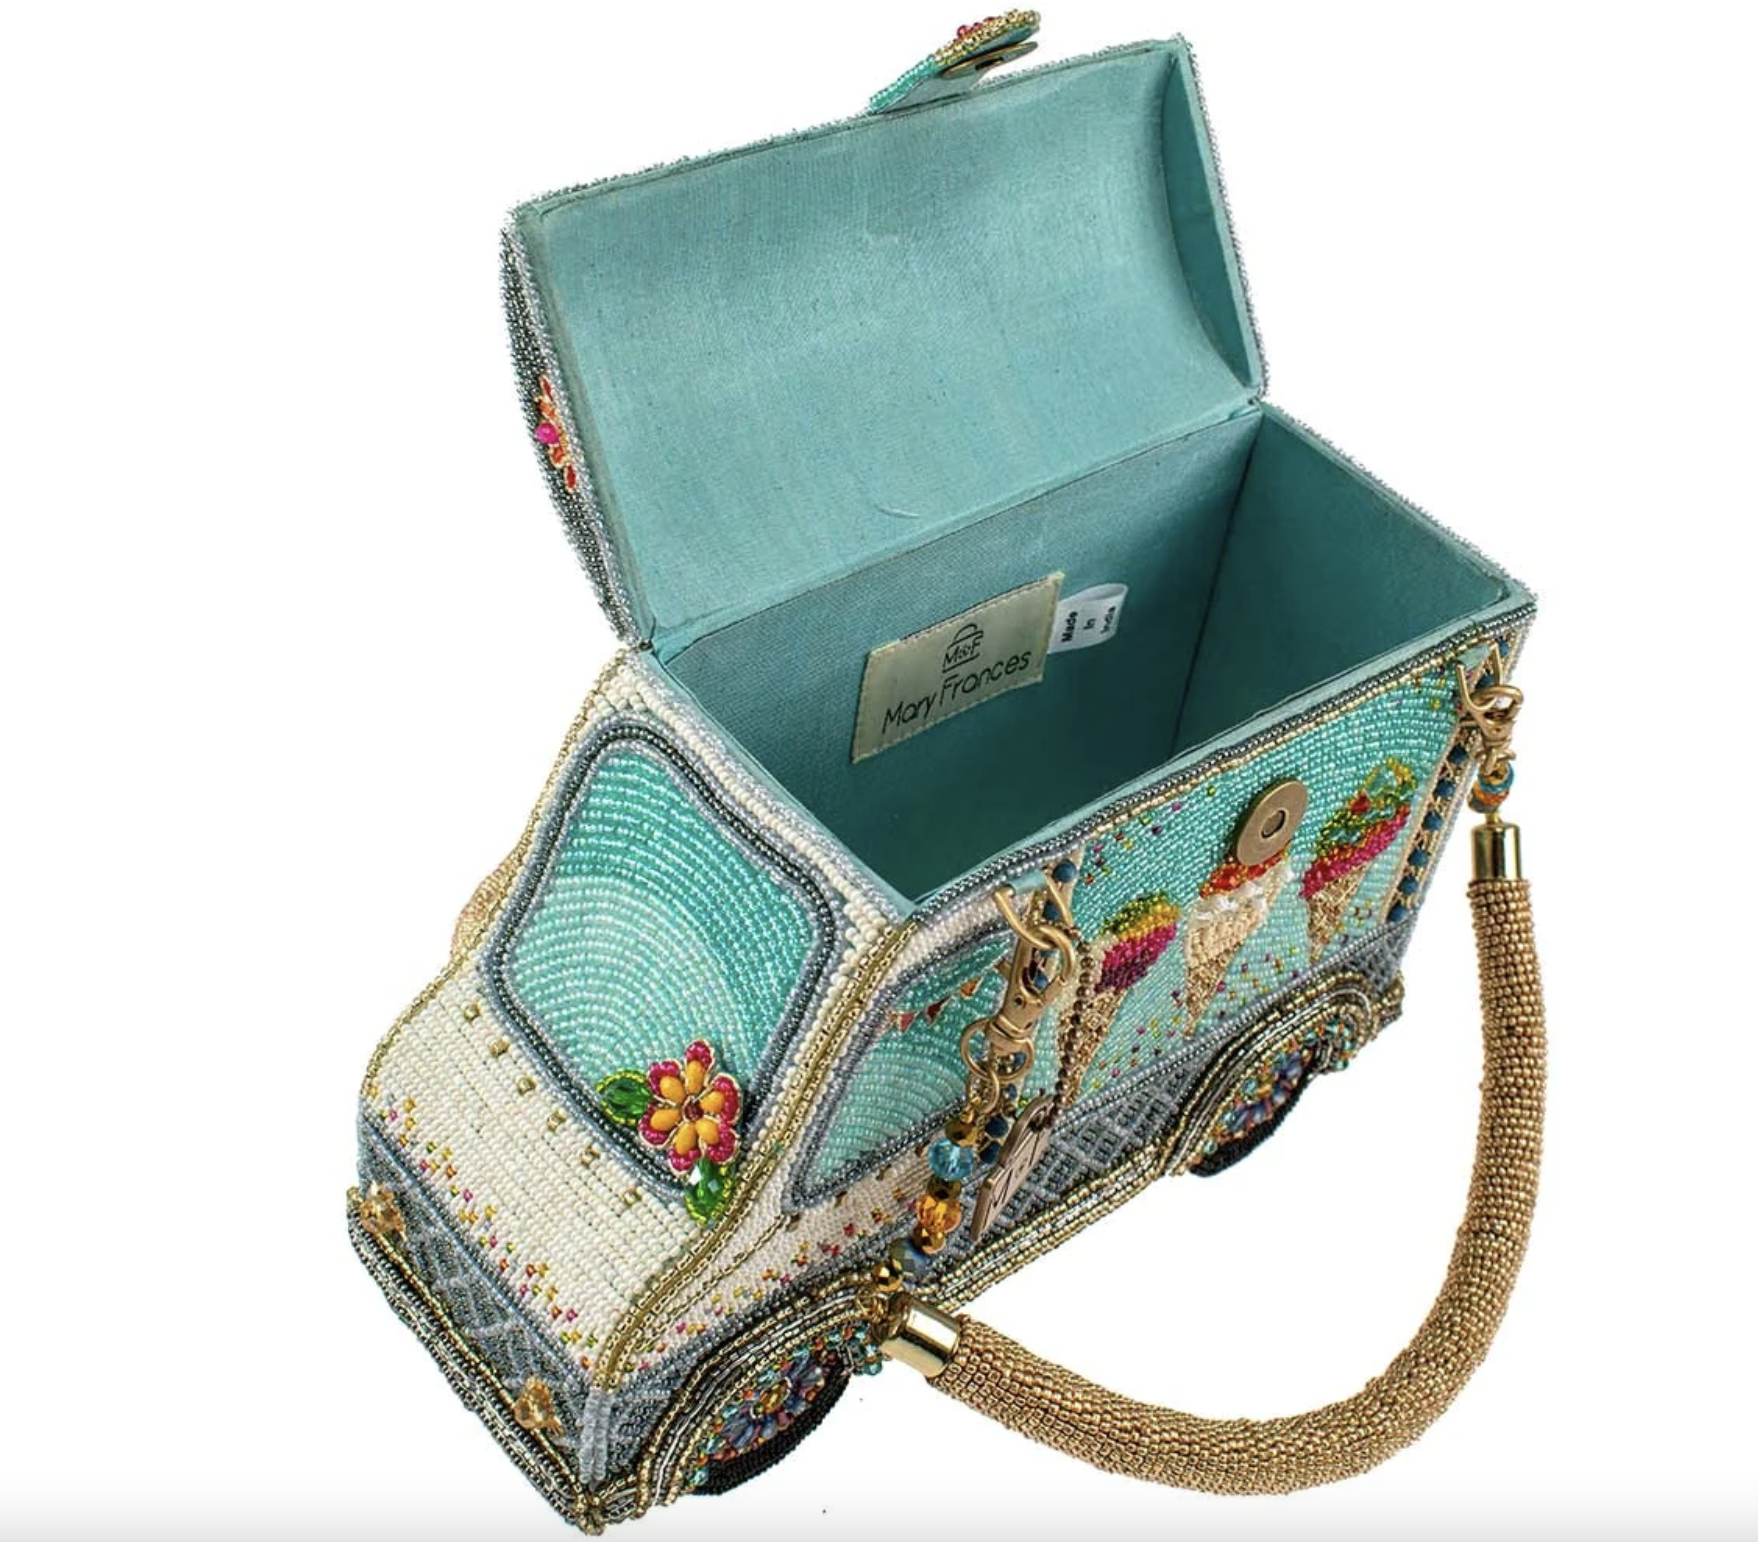 Mary Frances Mary Frances - Here's the Scoop Handbag